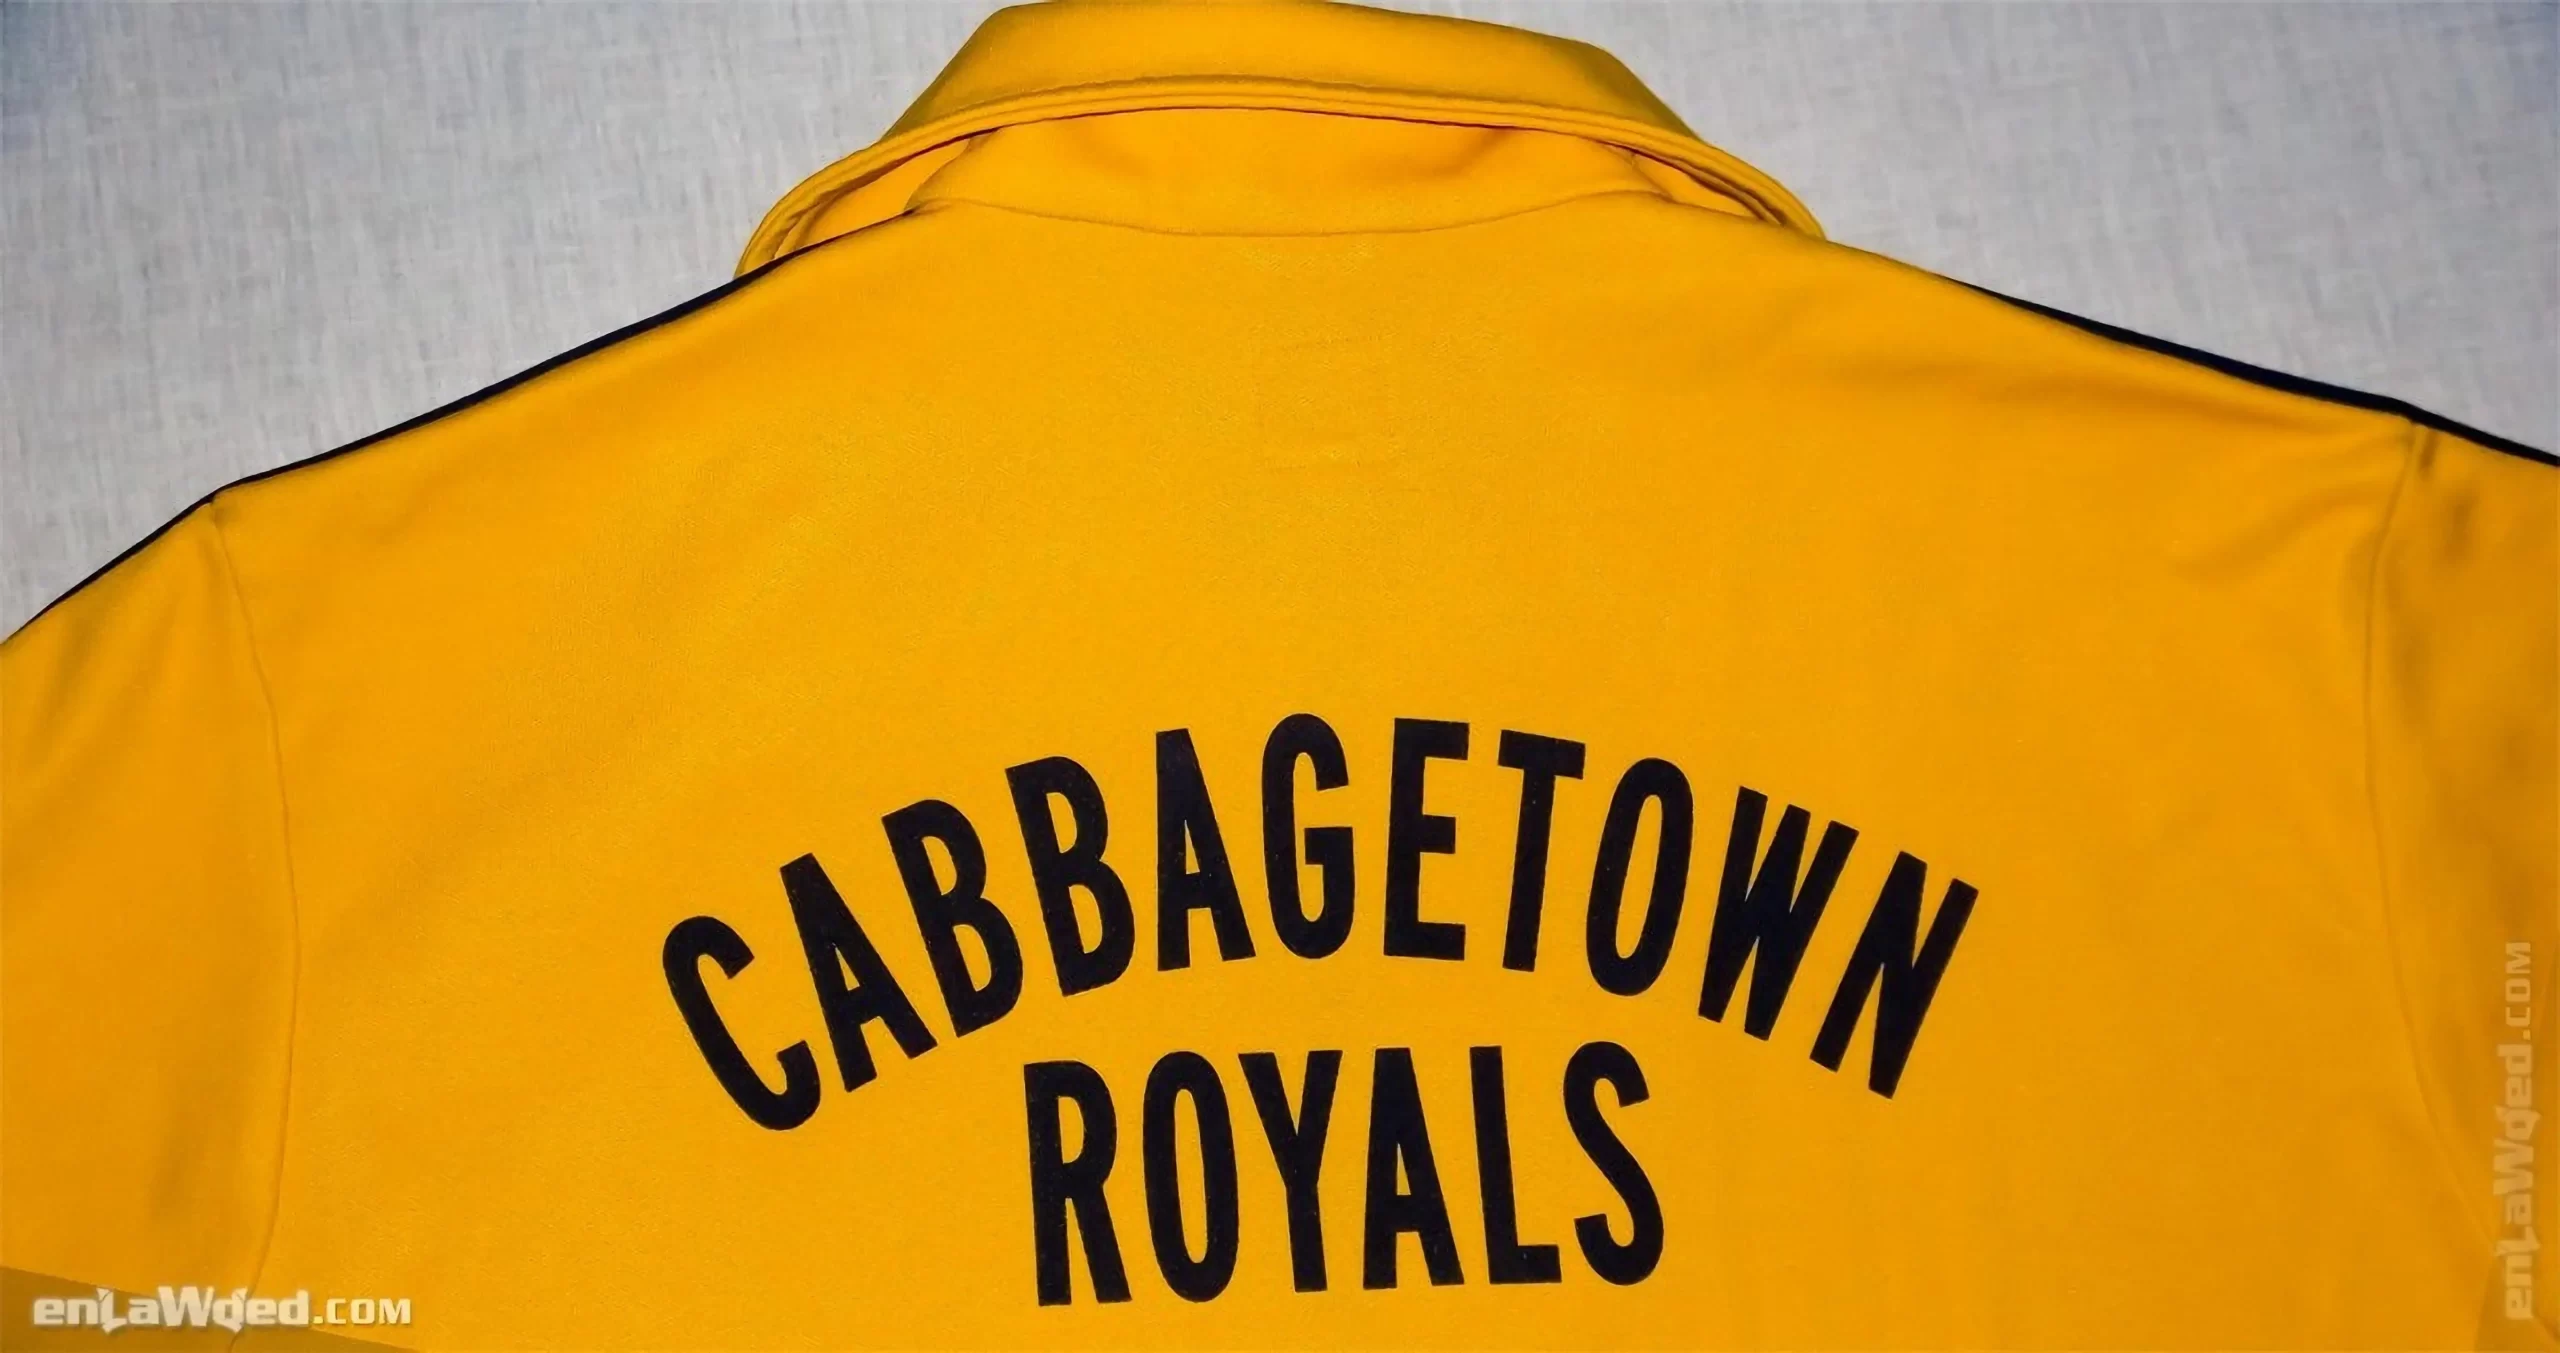 Men’s 2004 Cabbagetown Royals TT by Adidas Originals: Exclusive (EnLawded.com file #lmcgehs3u44avps61uf)